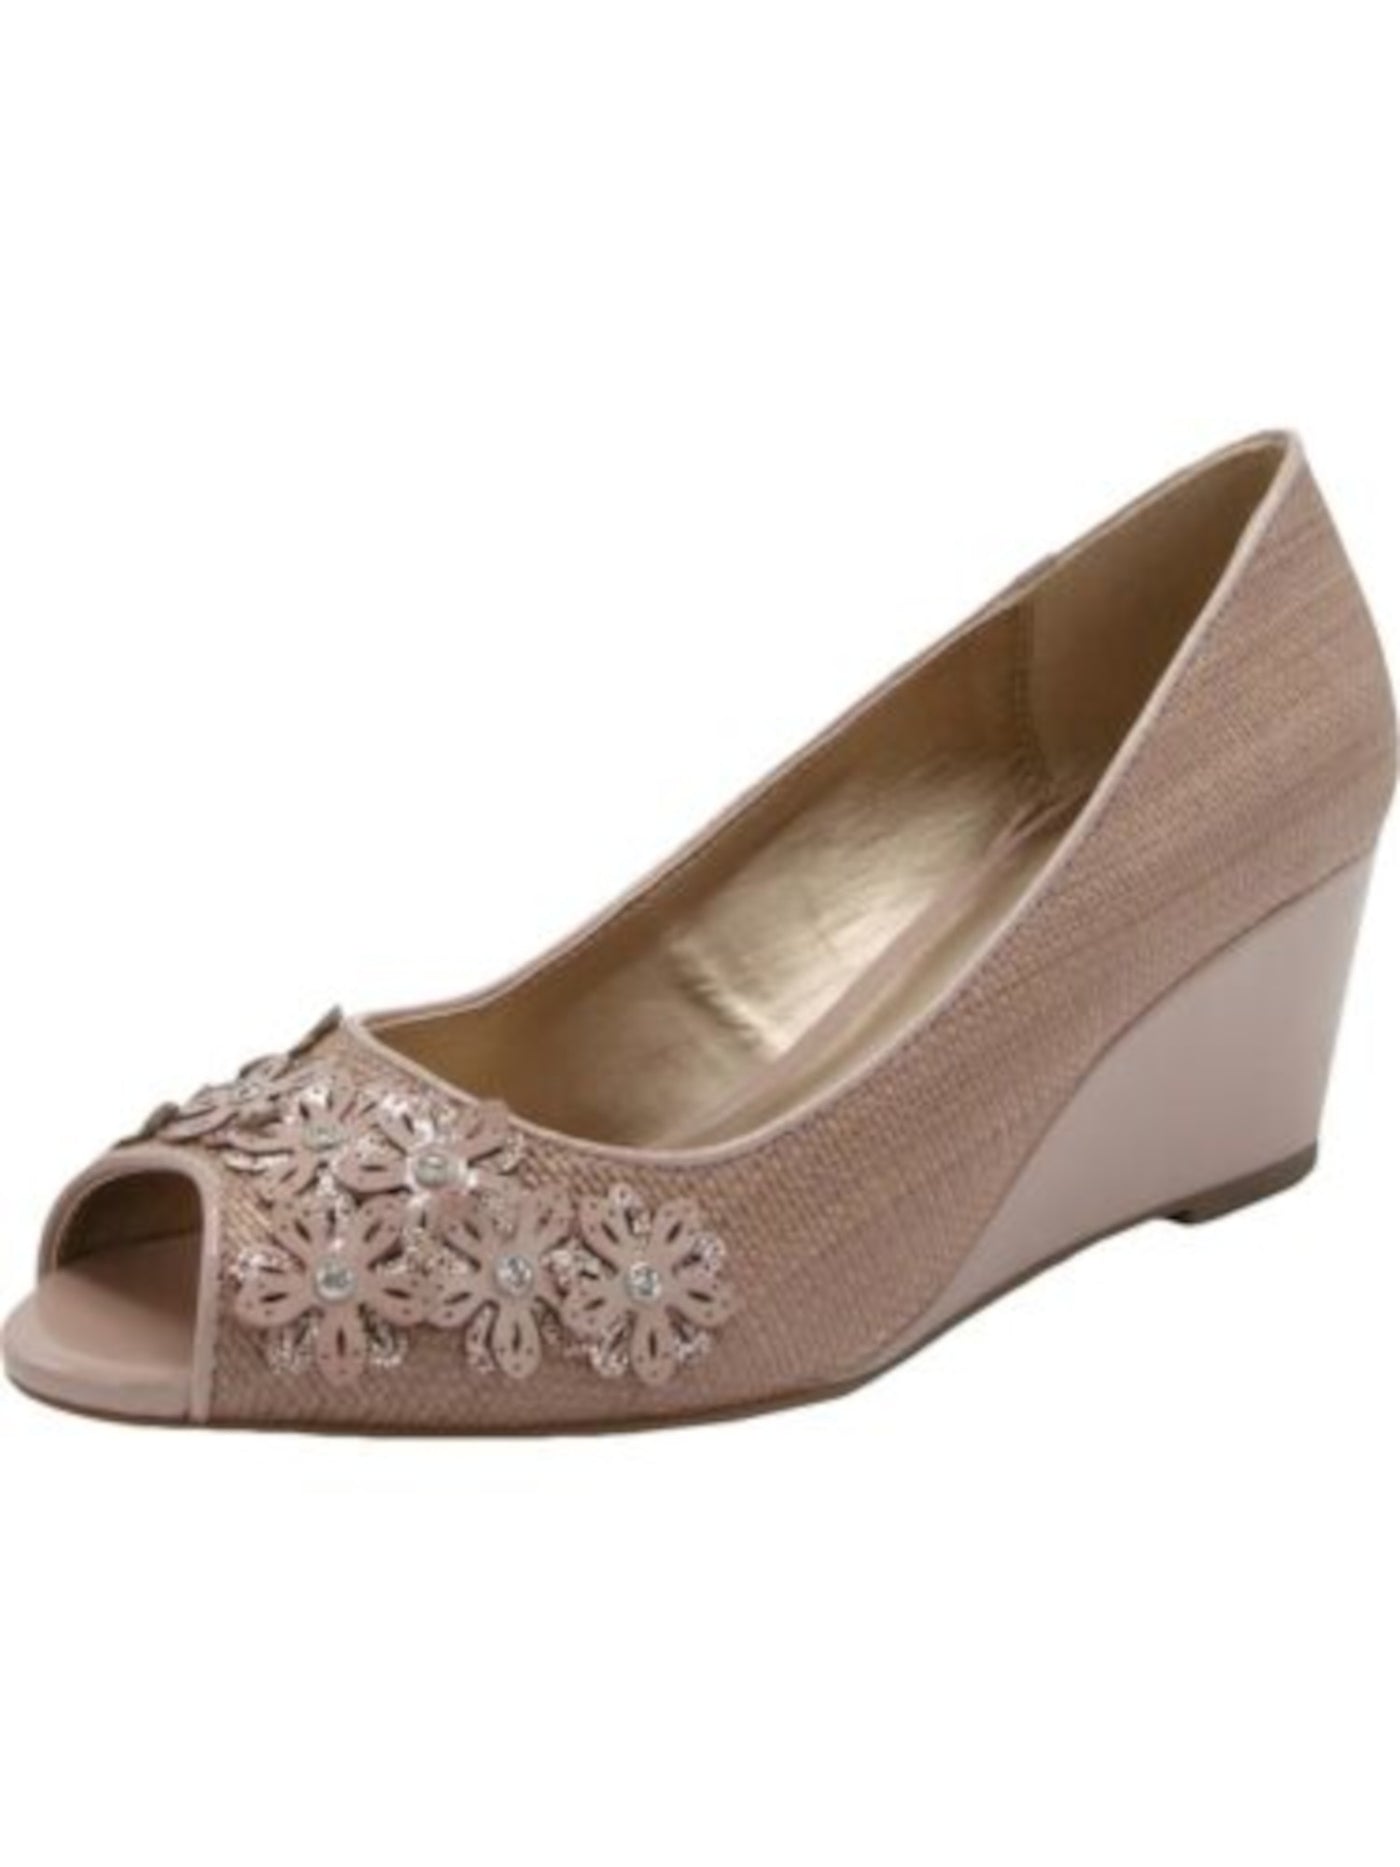 KAREN SCOTT Womens Beige Woven Pattern Floral Accents Padded Comfort Rhinestone Coraa Peep Toe Wedge Slip On Sandals Shoes 12 M